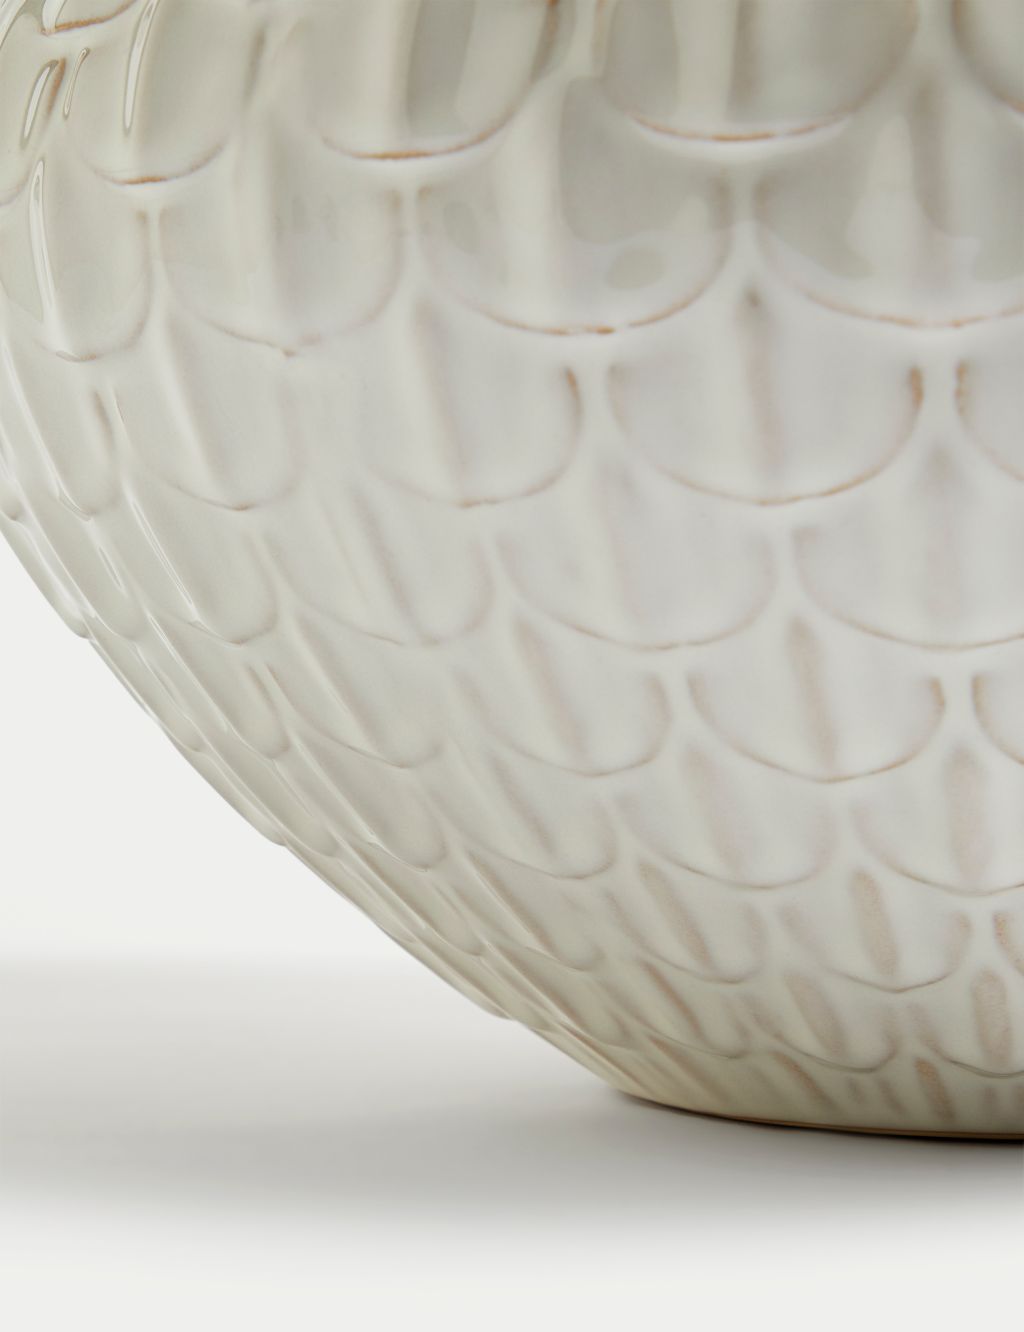 Medium Scalloped Textured Vase 7 of 9